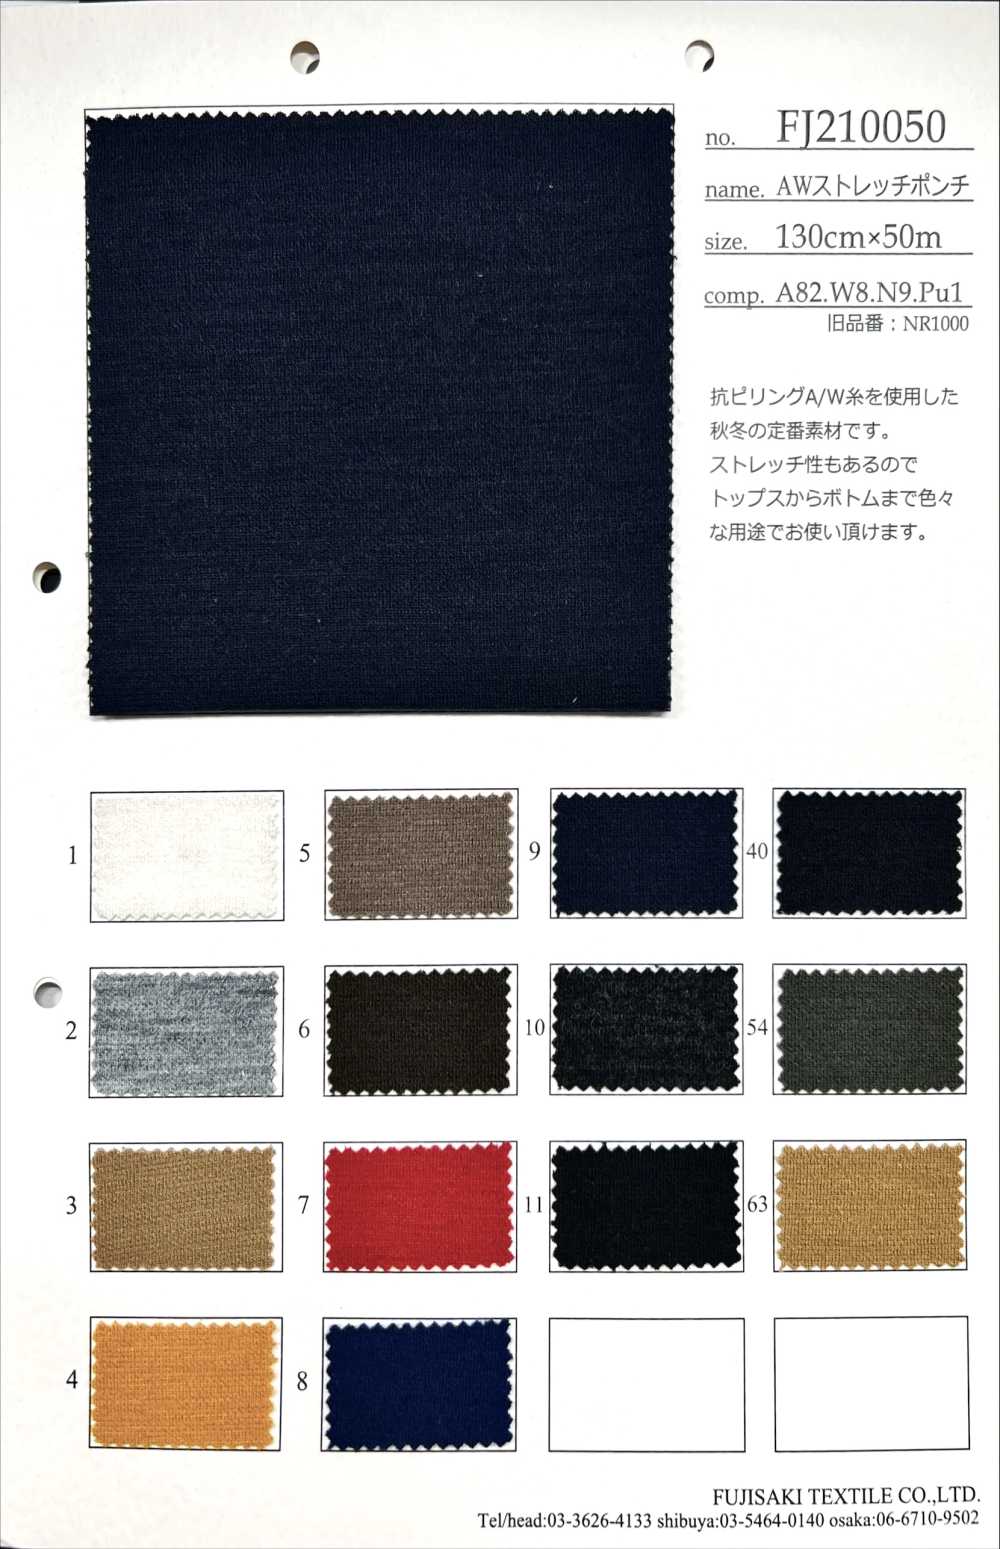 FJ210050 Vải Thun Tuyết Mưa Co Giãn AW Fujisaki Textile